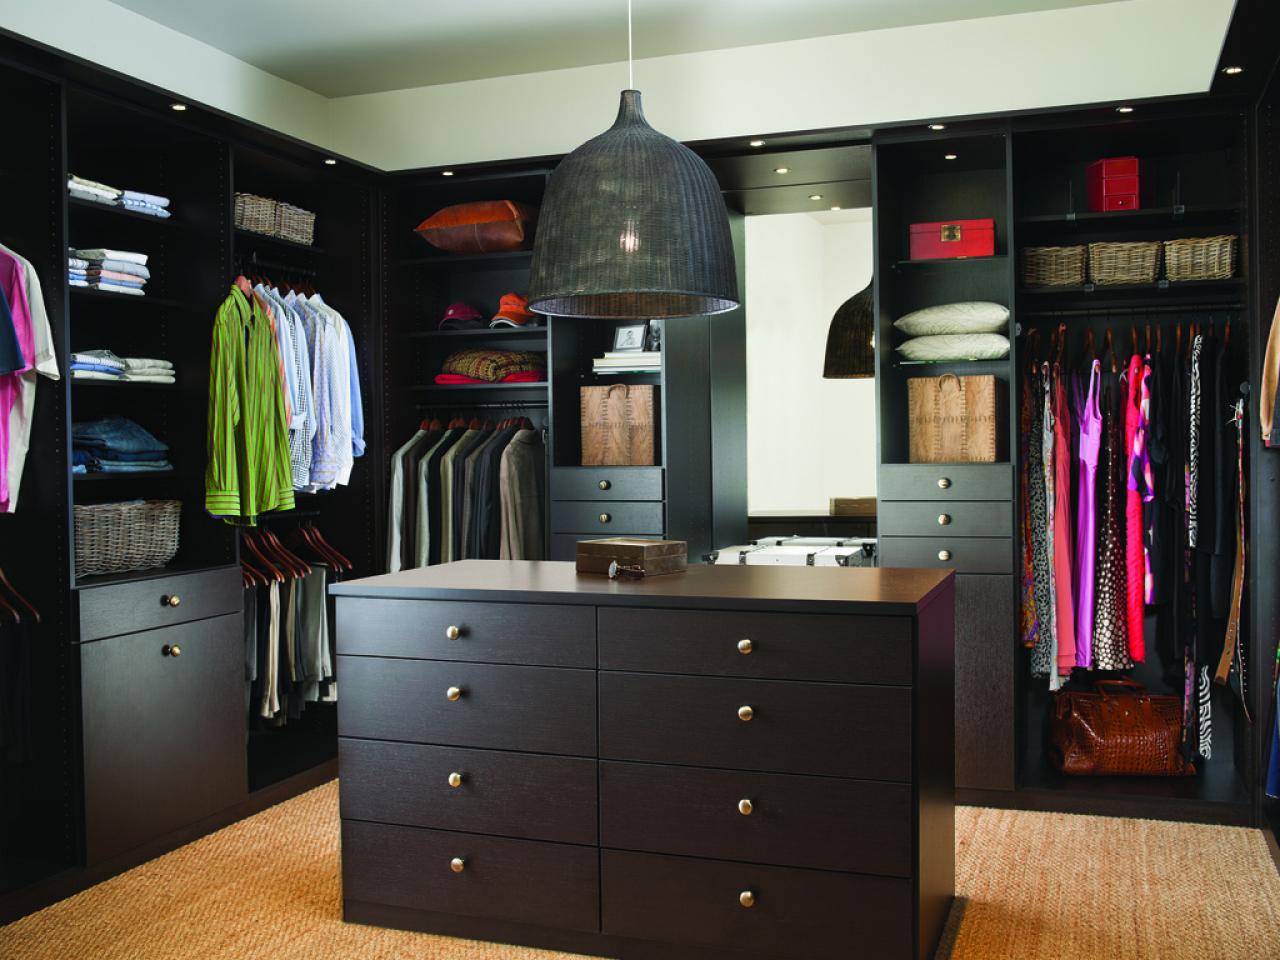 4 Tips For Organizing Your Closet - Haute Off The Rack  Organizing walk in  closet, Closet designs, Master closet organization